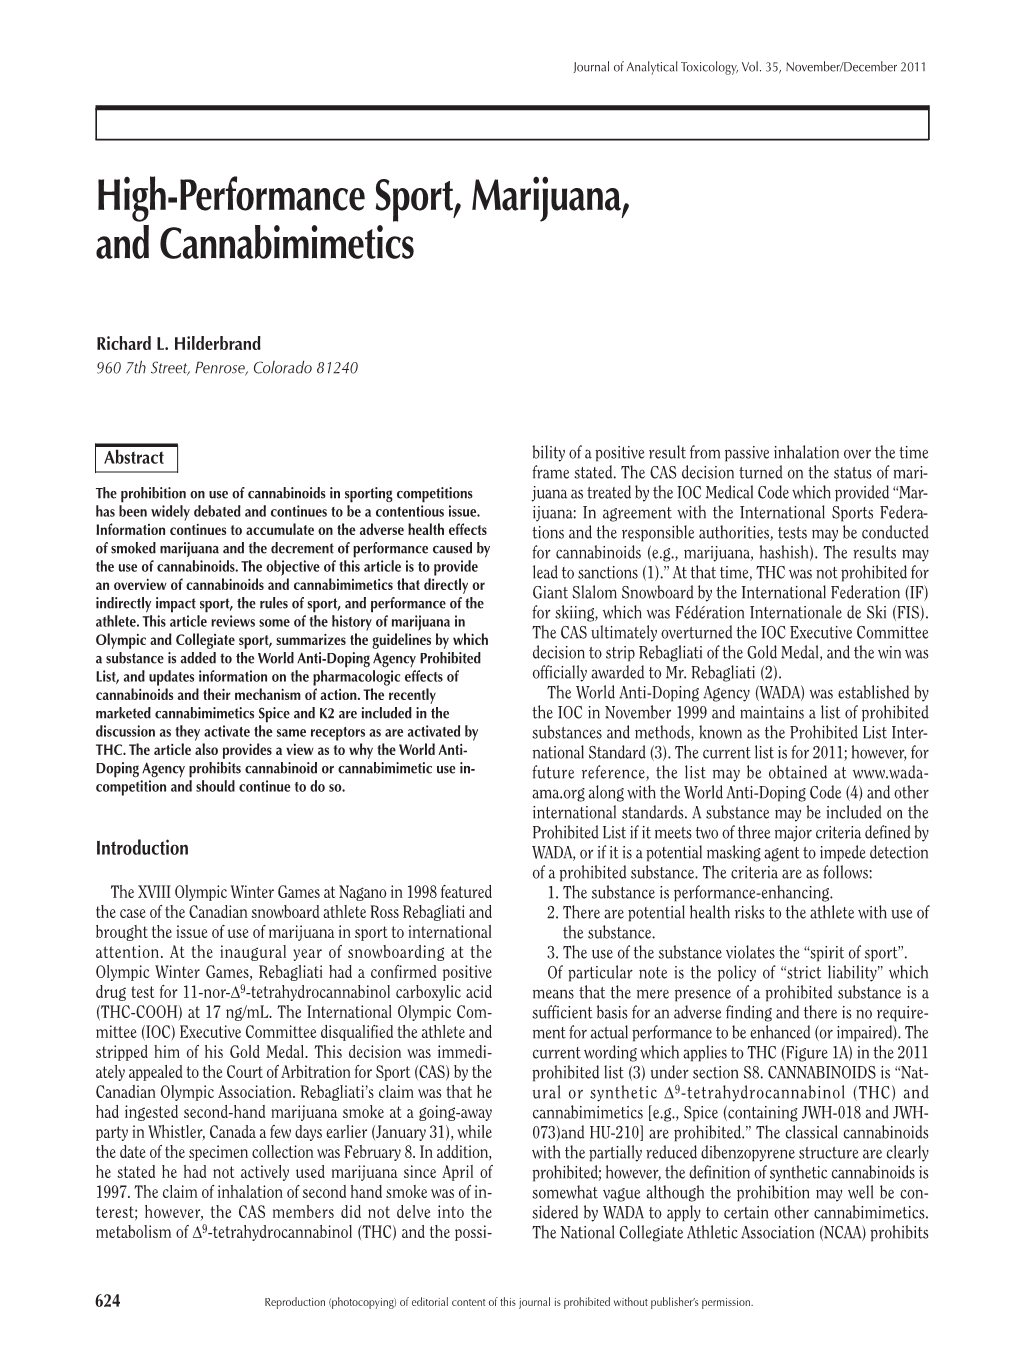 High-Performance Sport, Marijuana, and Cannabimimetics